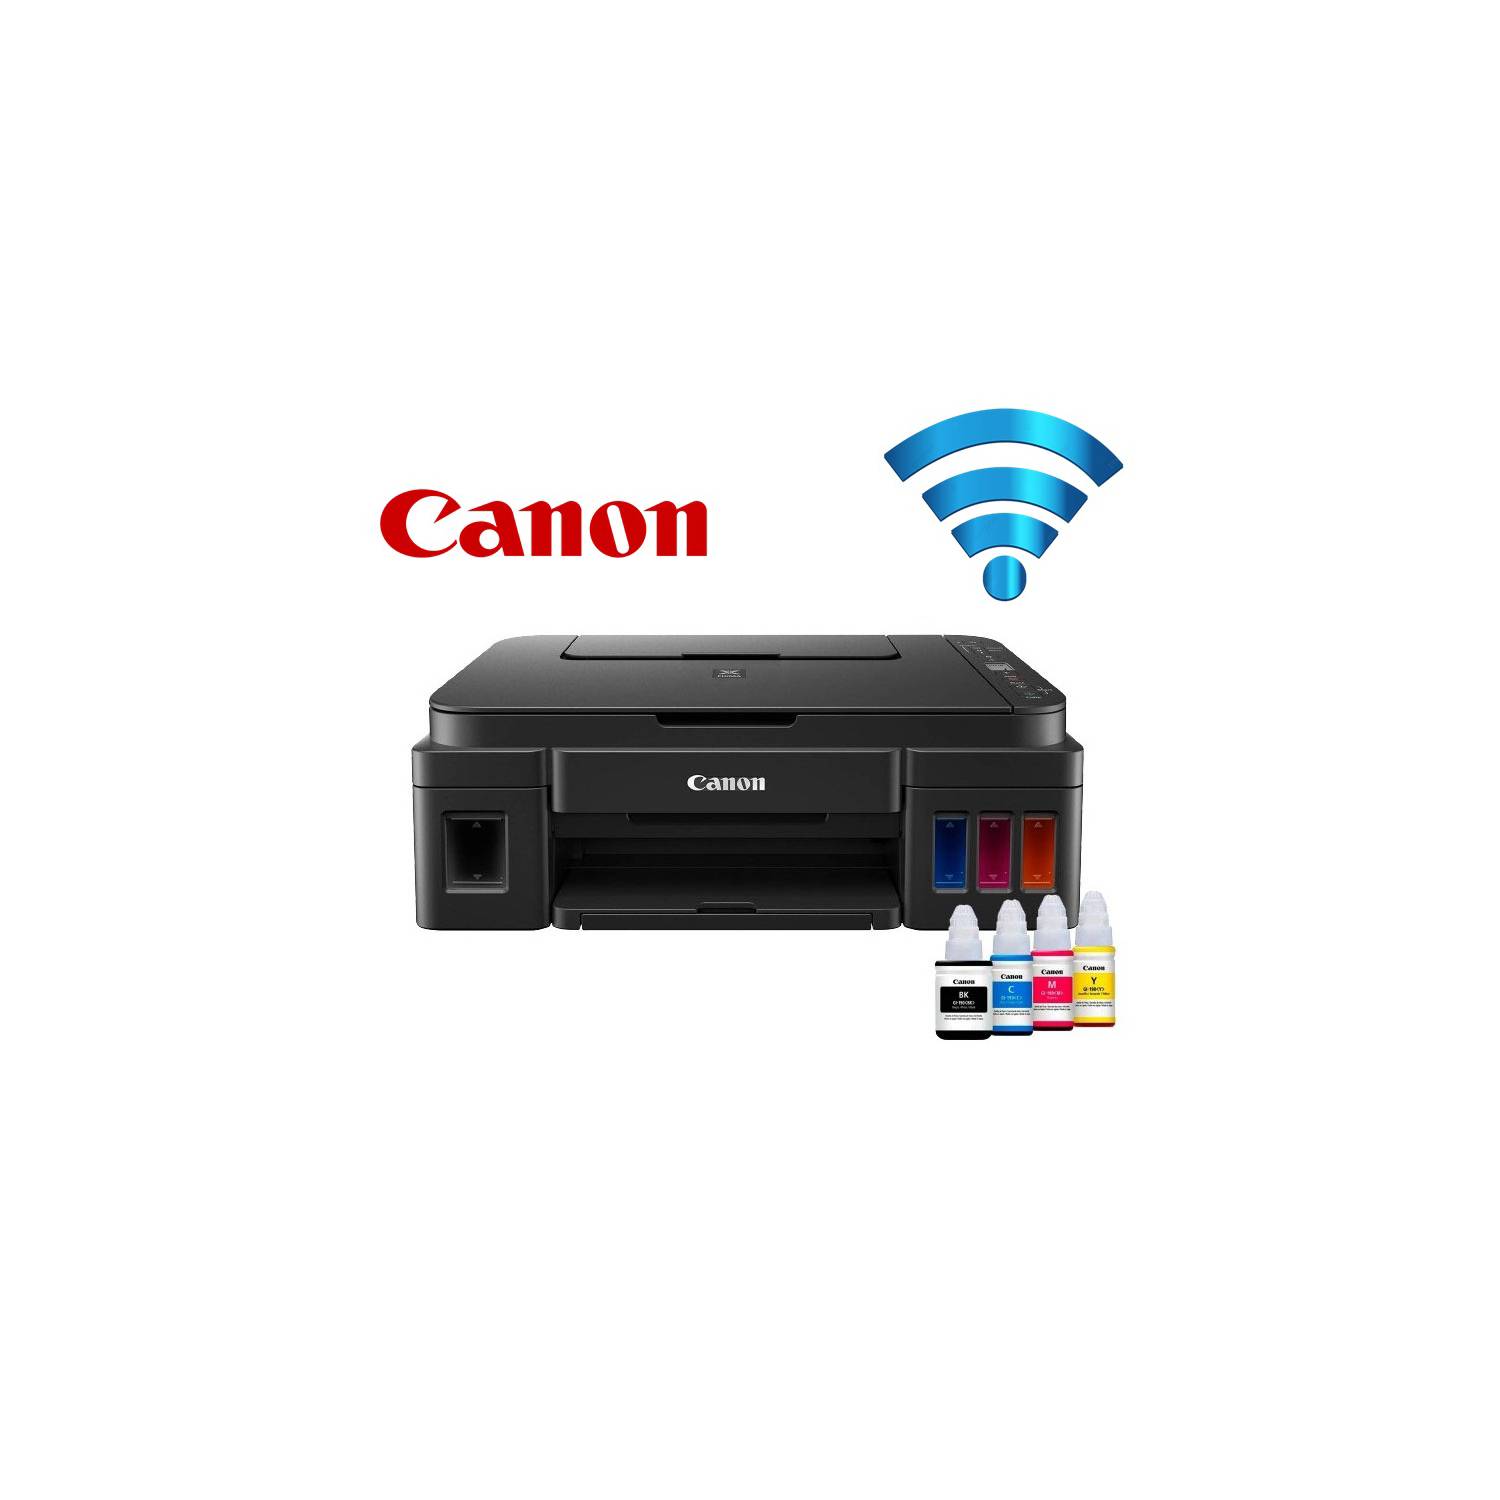 Impresora Multifuncional Canon Pixma G3110 Wifi